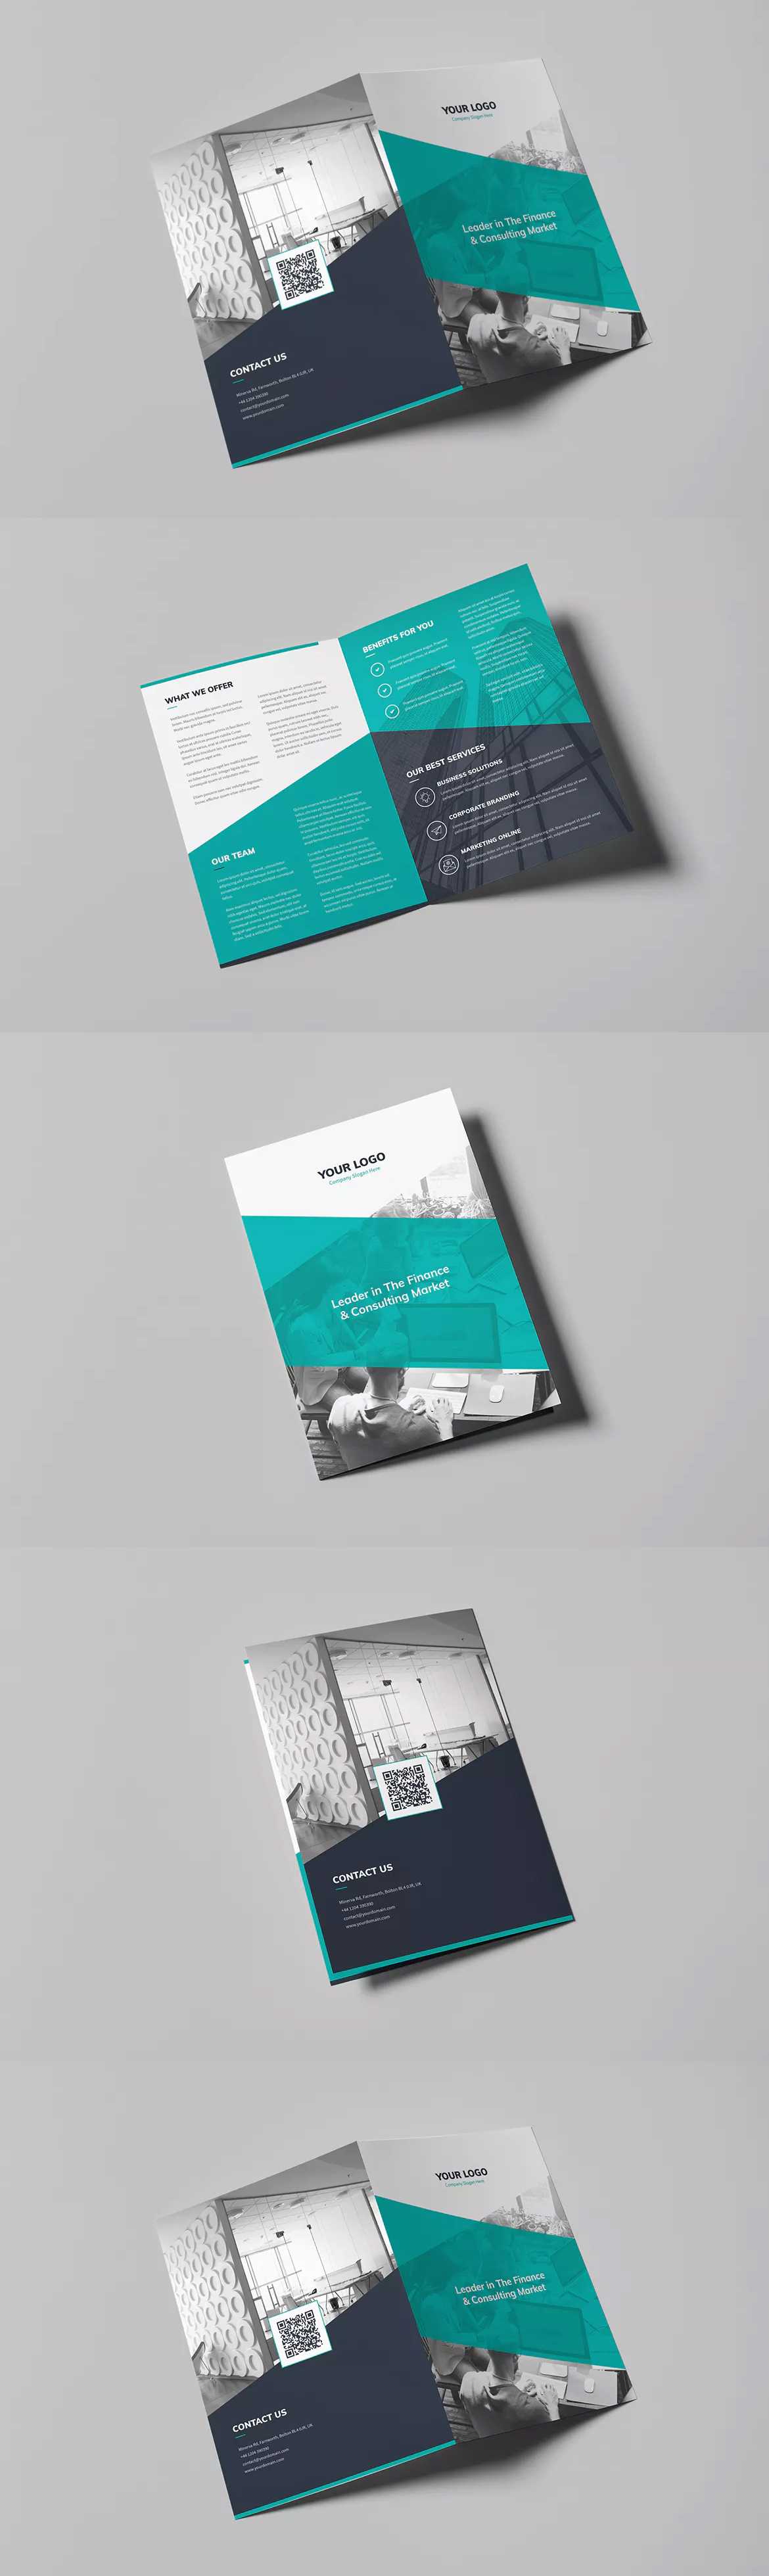 Corporate Bi Fold Brochure Template Psd A4 And Us Letter Throughout Letter Size Brochure Template